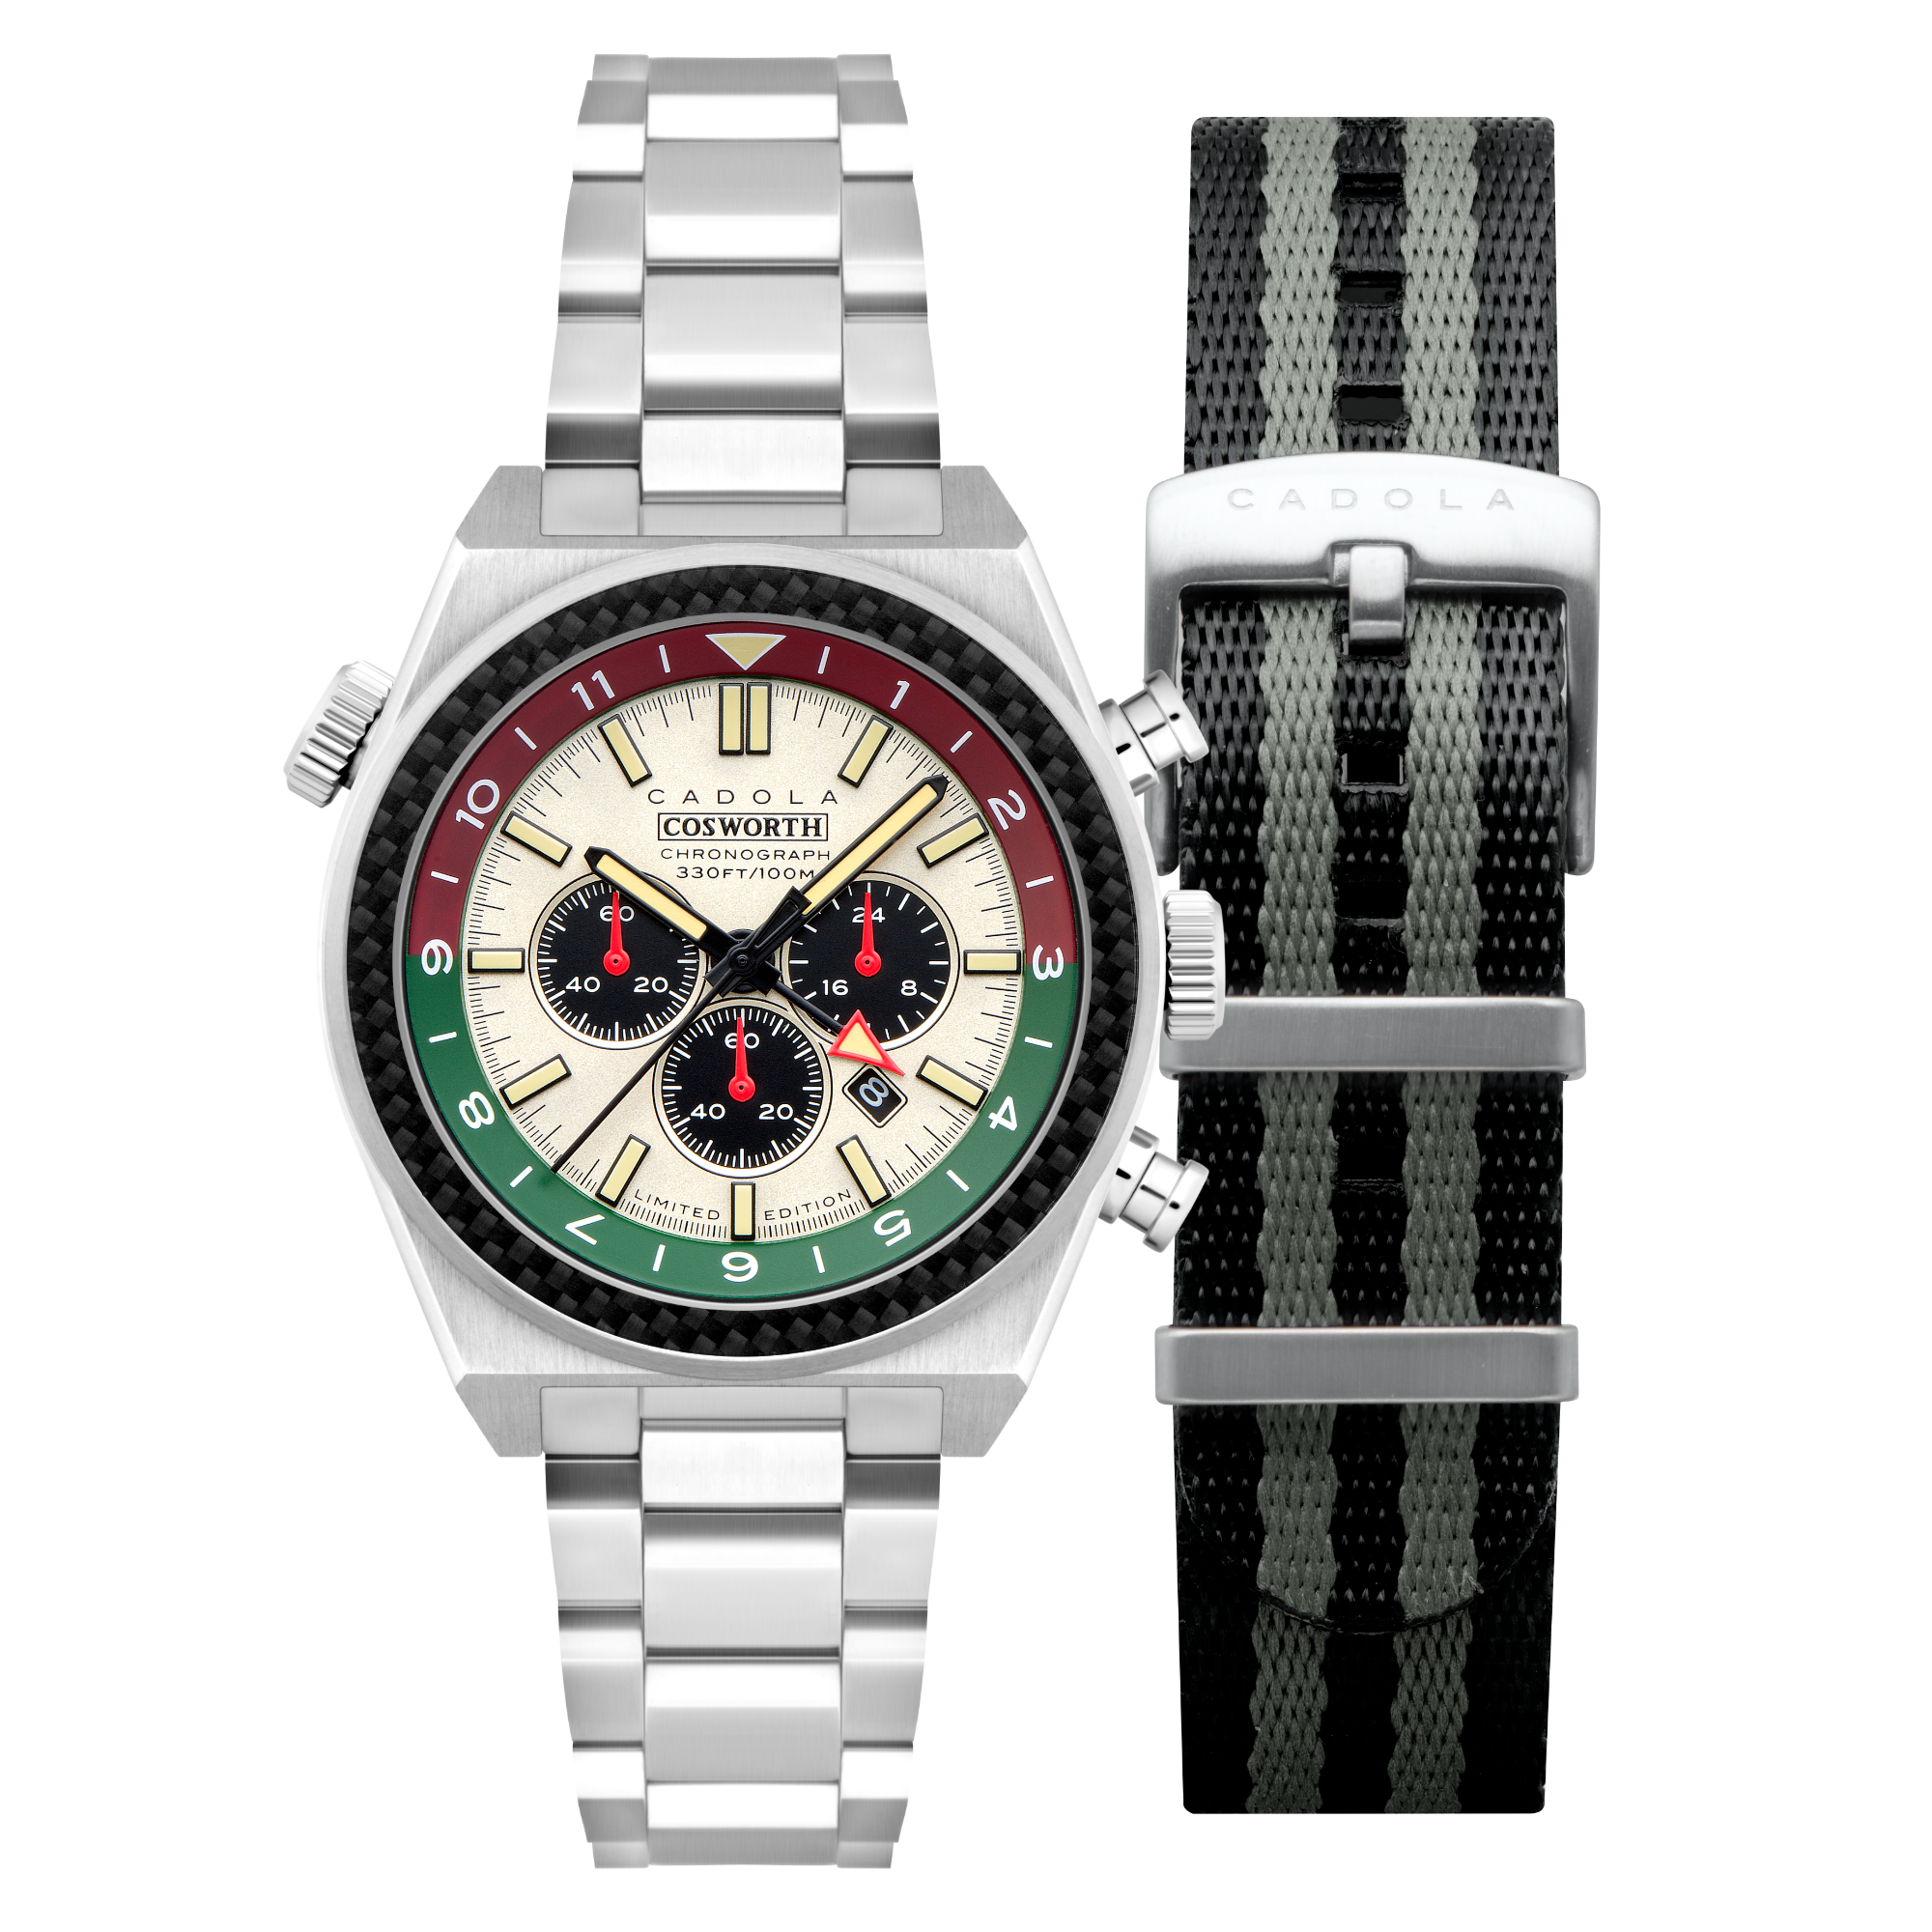 CADOLA Cadola Men's Italian Khaki Cosworth Costin Dual Time Chronograph Limited Edition Watch CD-1042-22